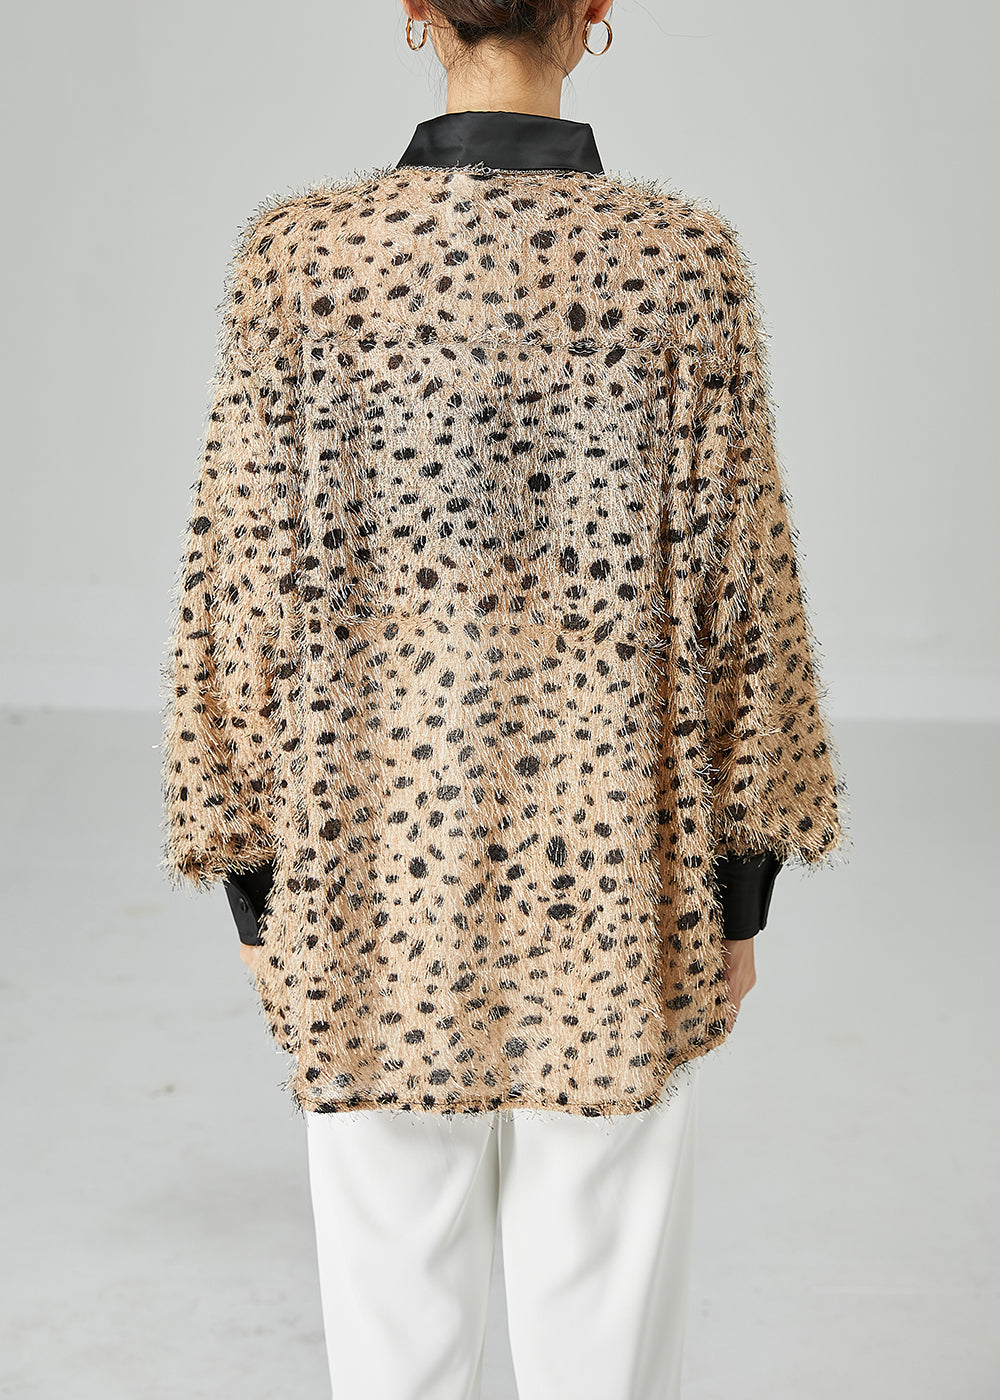 Casual Khaki Oversized Fluffy Leopard Print Top Long Sleeve LY6077 - fabuloryshop